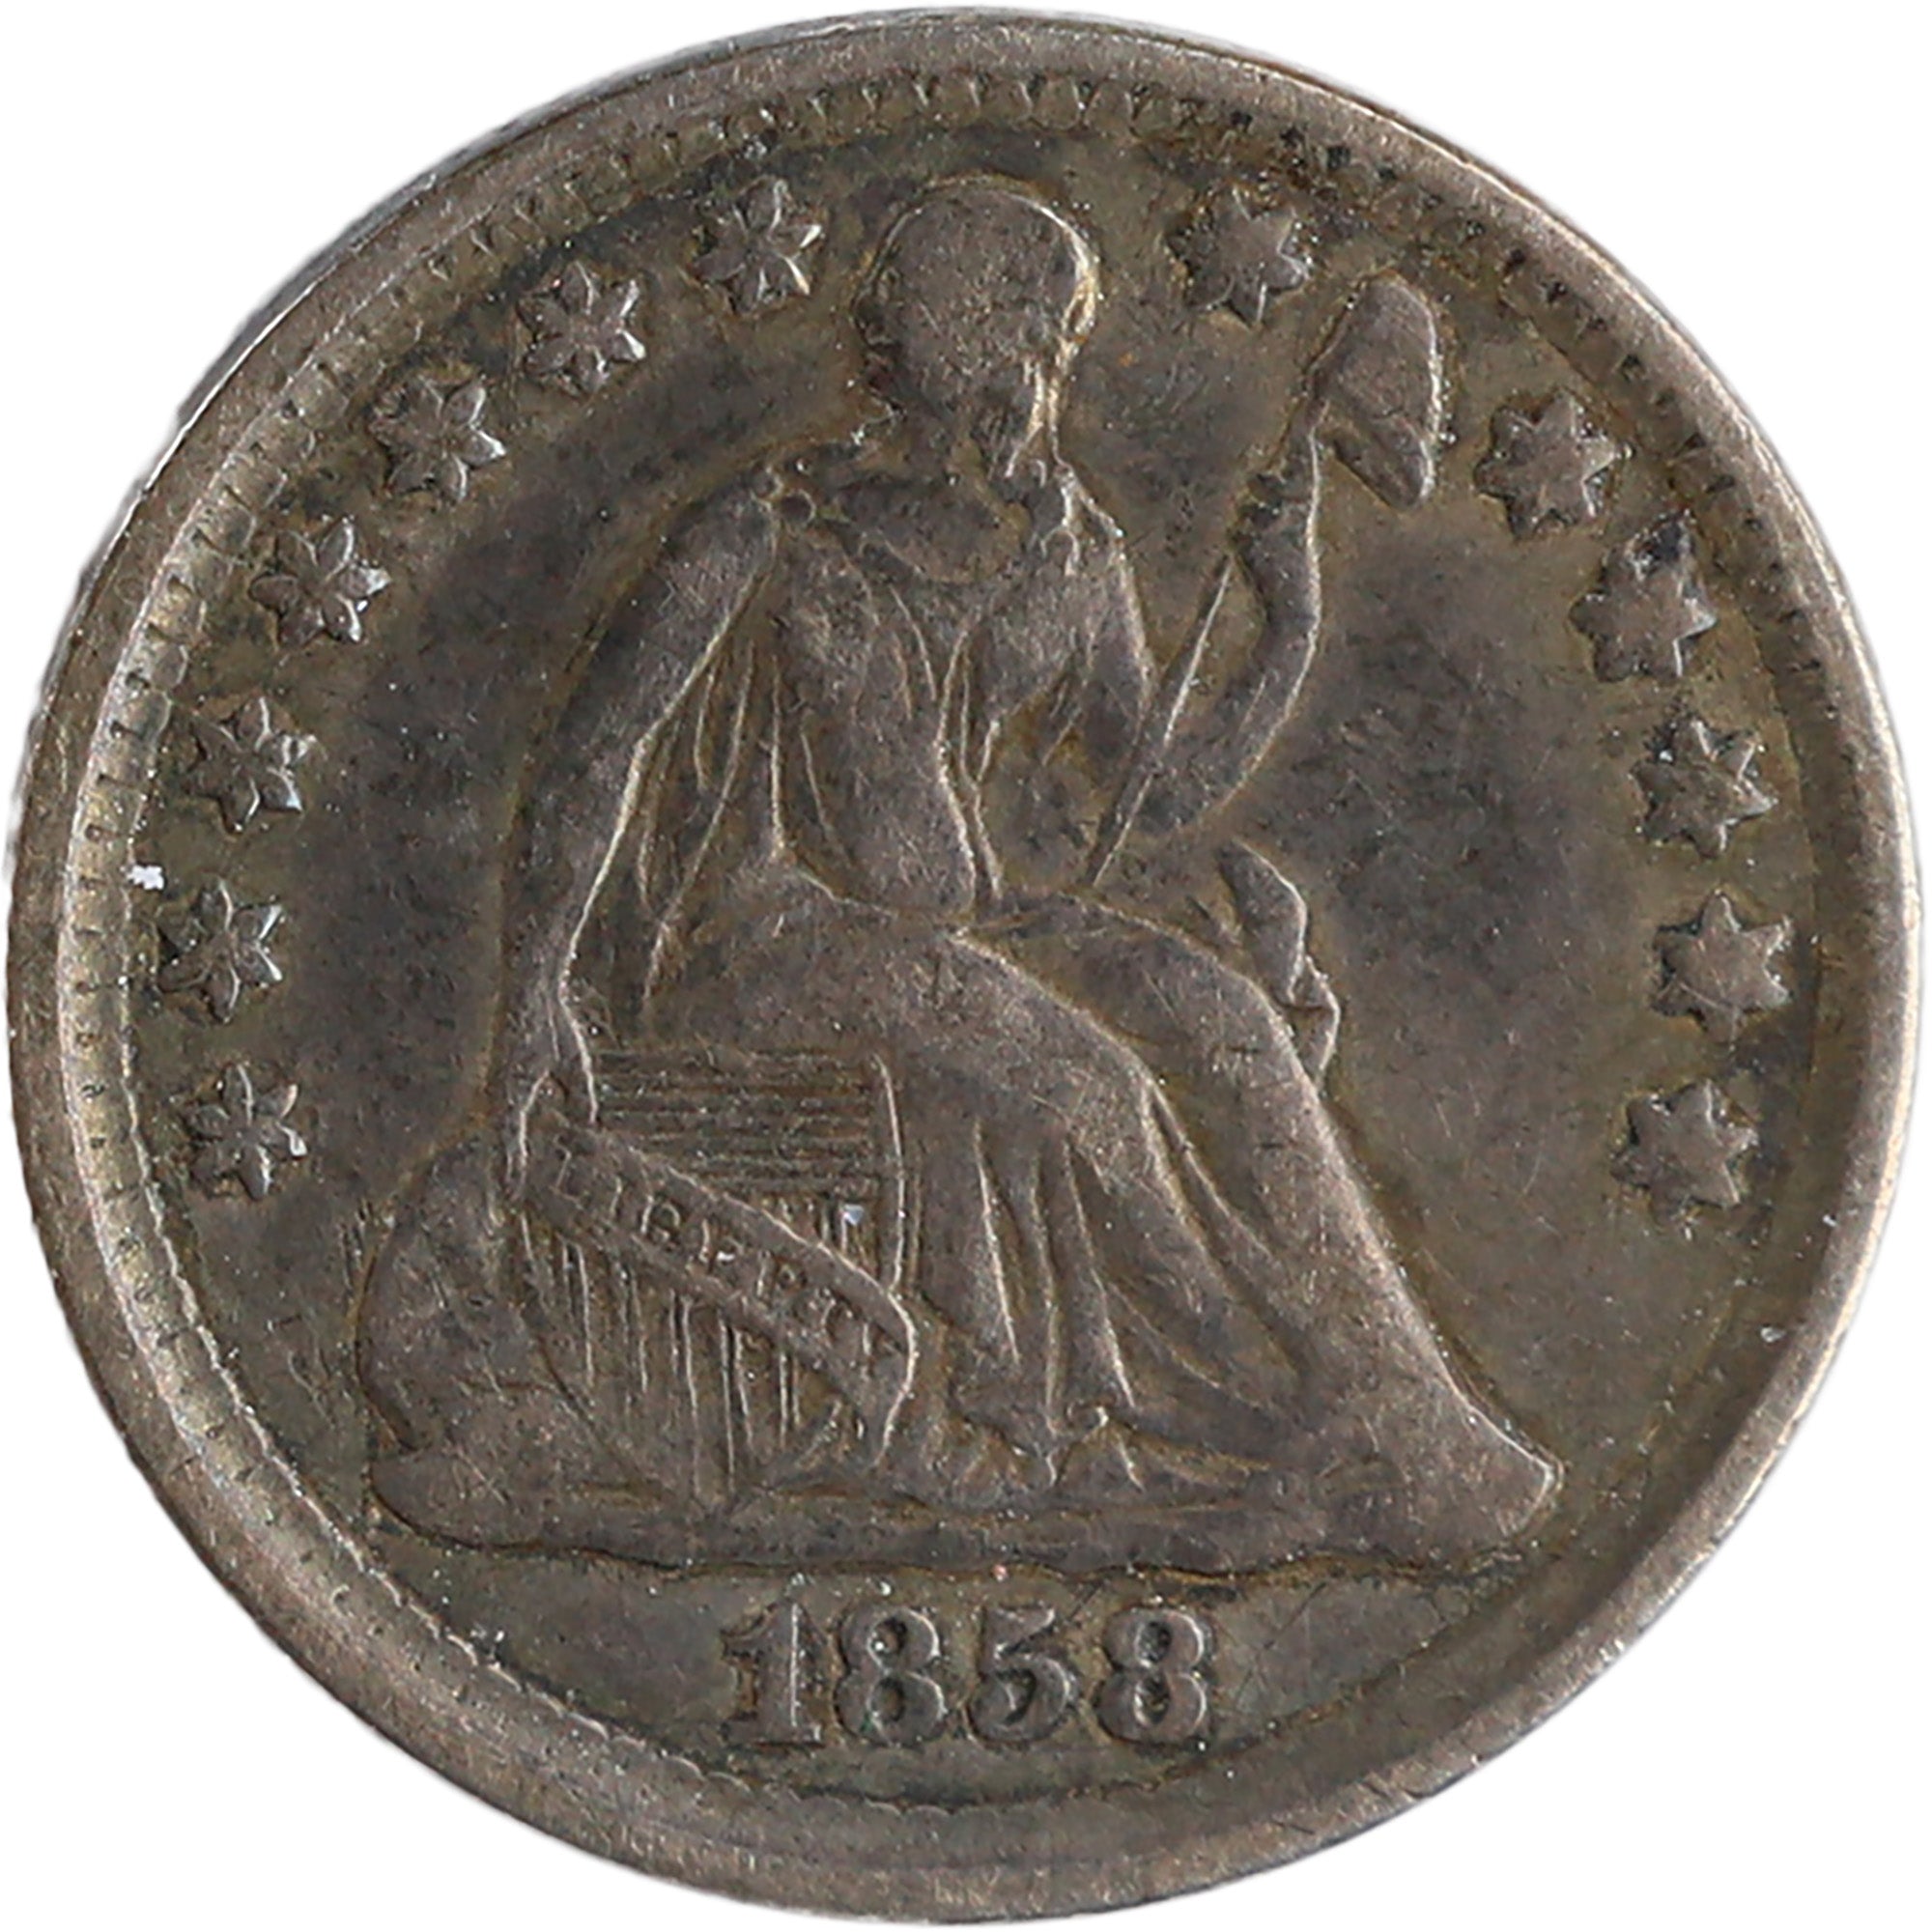 1858 Seated Liberty Half Dime VF Very Fine Silver 5c Coin SKU:I11951